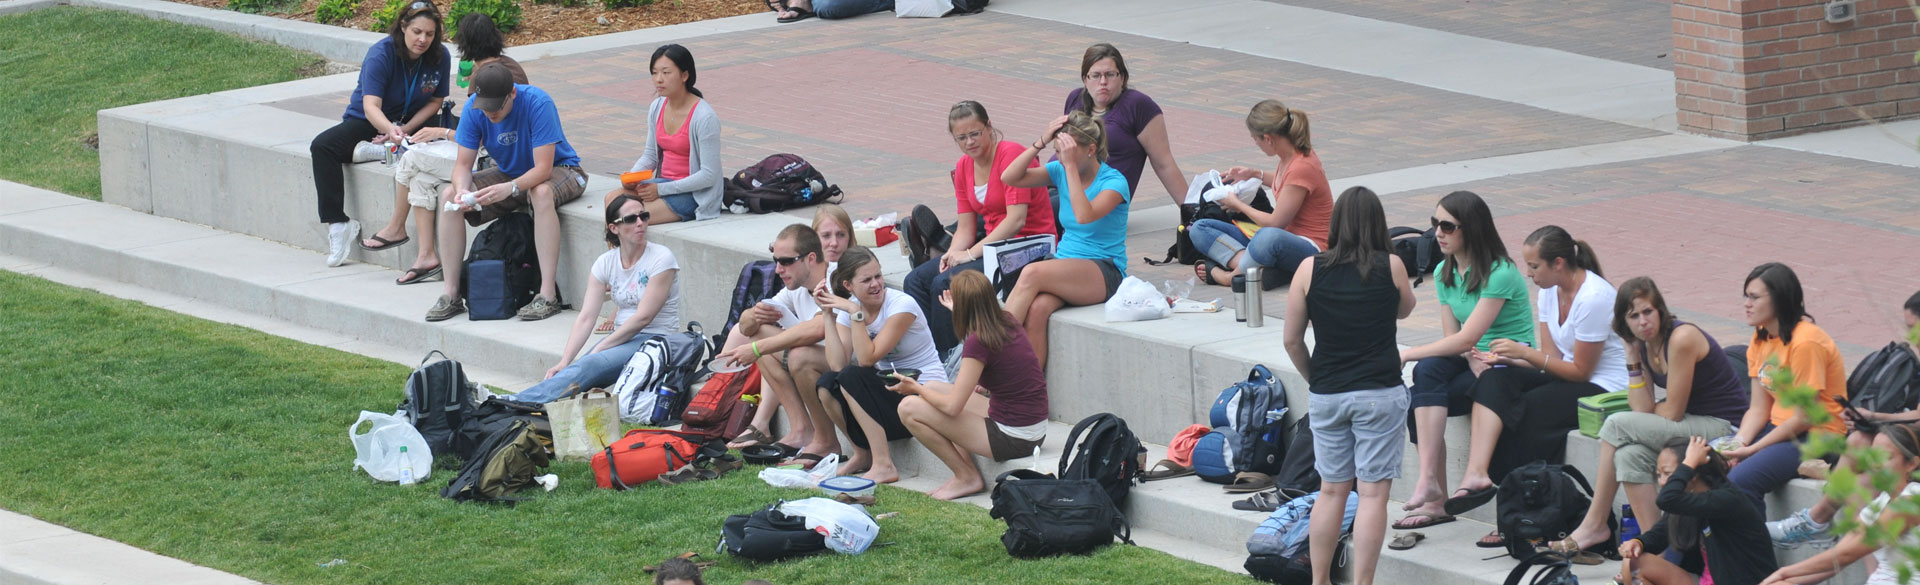 Students on break on campus